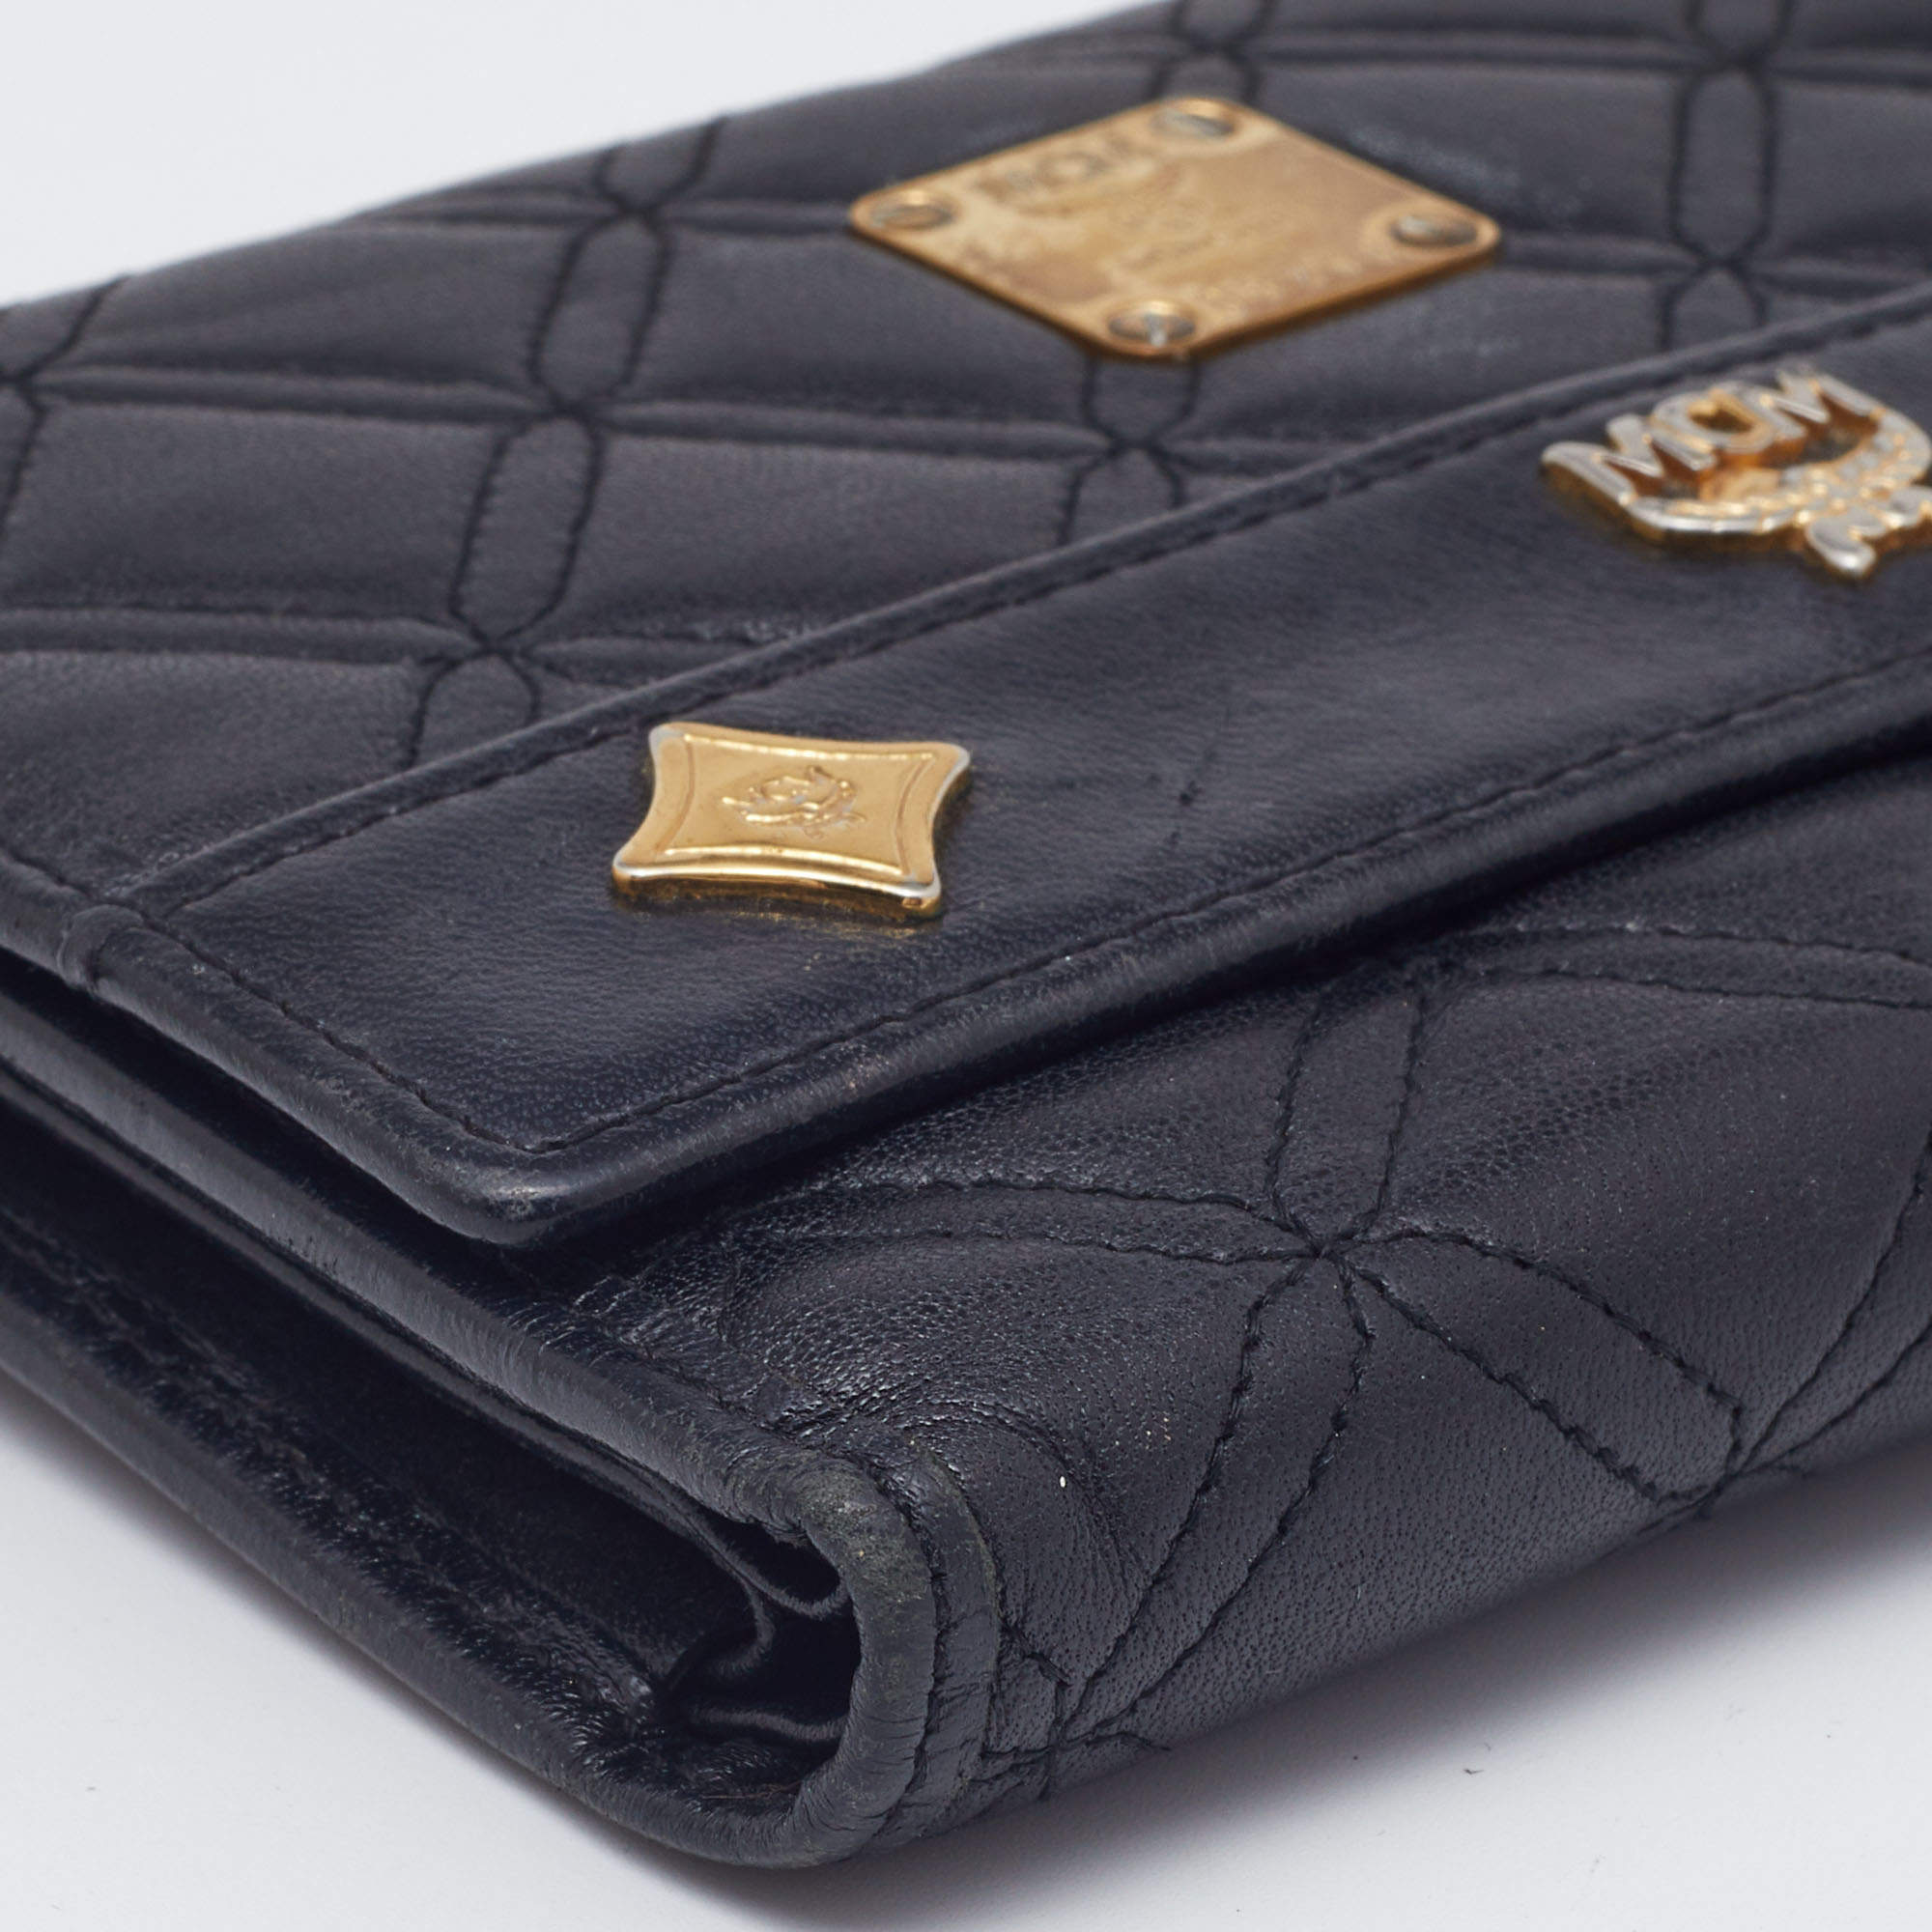 Chanel casino small coin purse, Women's Fashion, Bags & Wallets